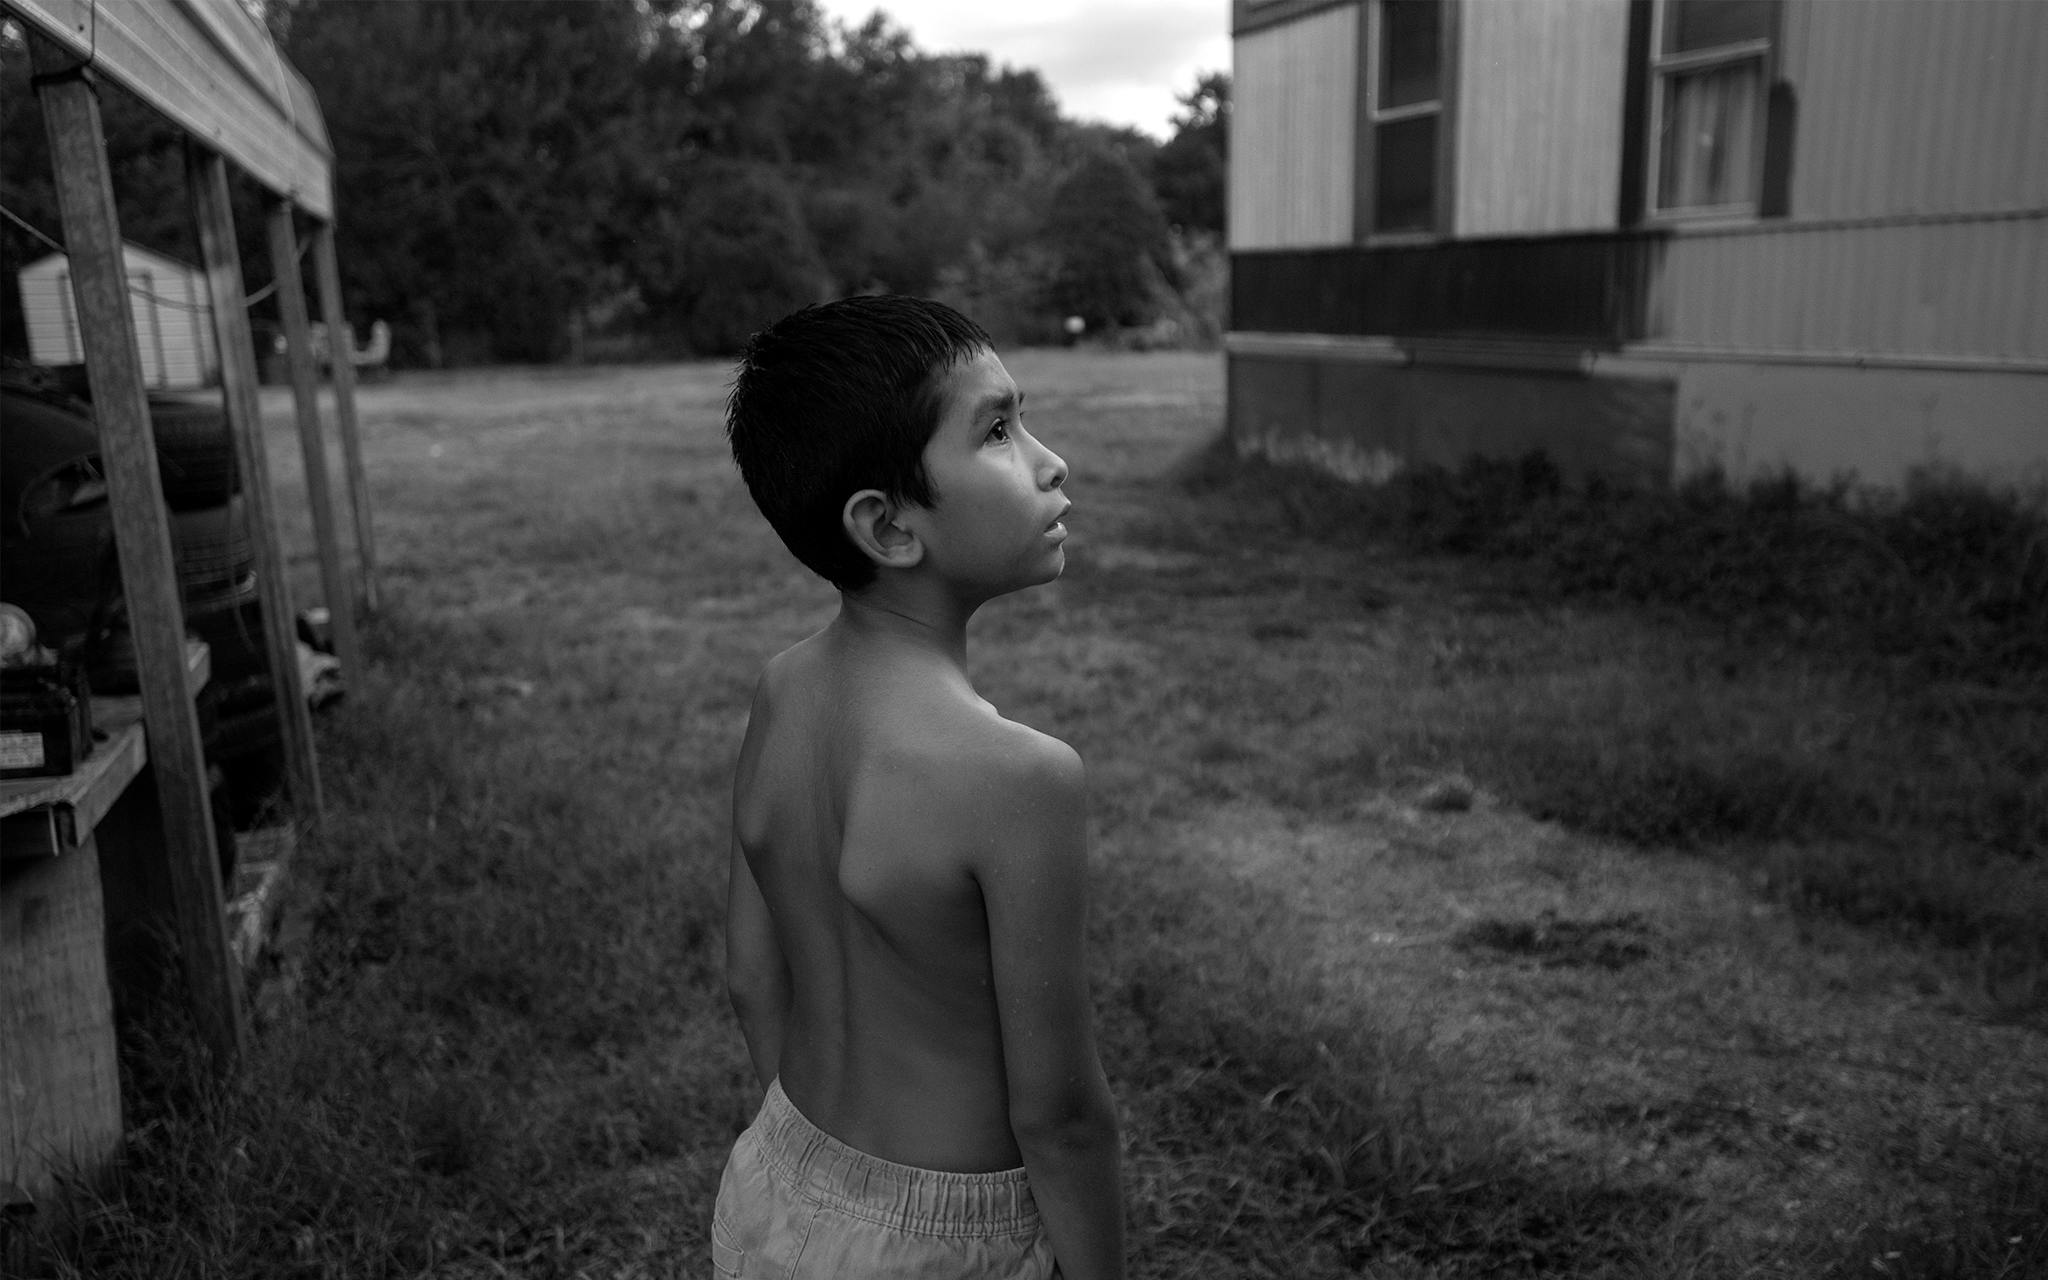 Dan Marino Estrada, 8, the son of Christian’s sister Marianna, stands outside Maricela’s house in Kyle on September 28, 2019.